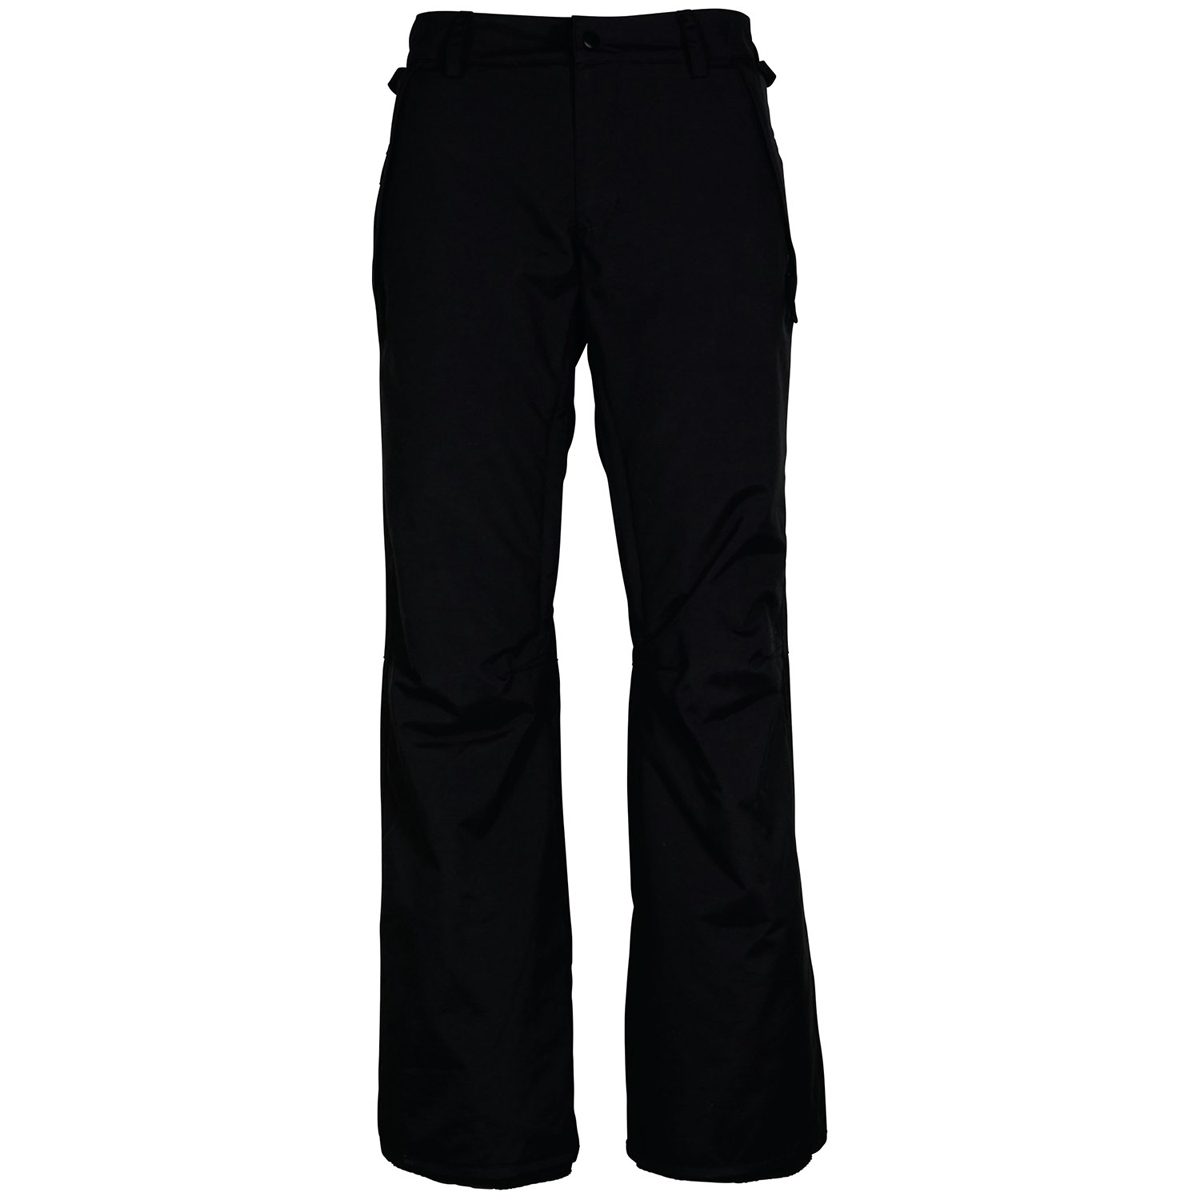 L9 Sports - 686 Standard Pants Women's